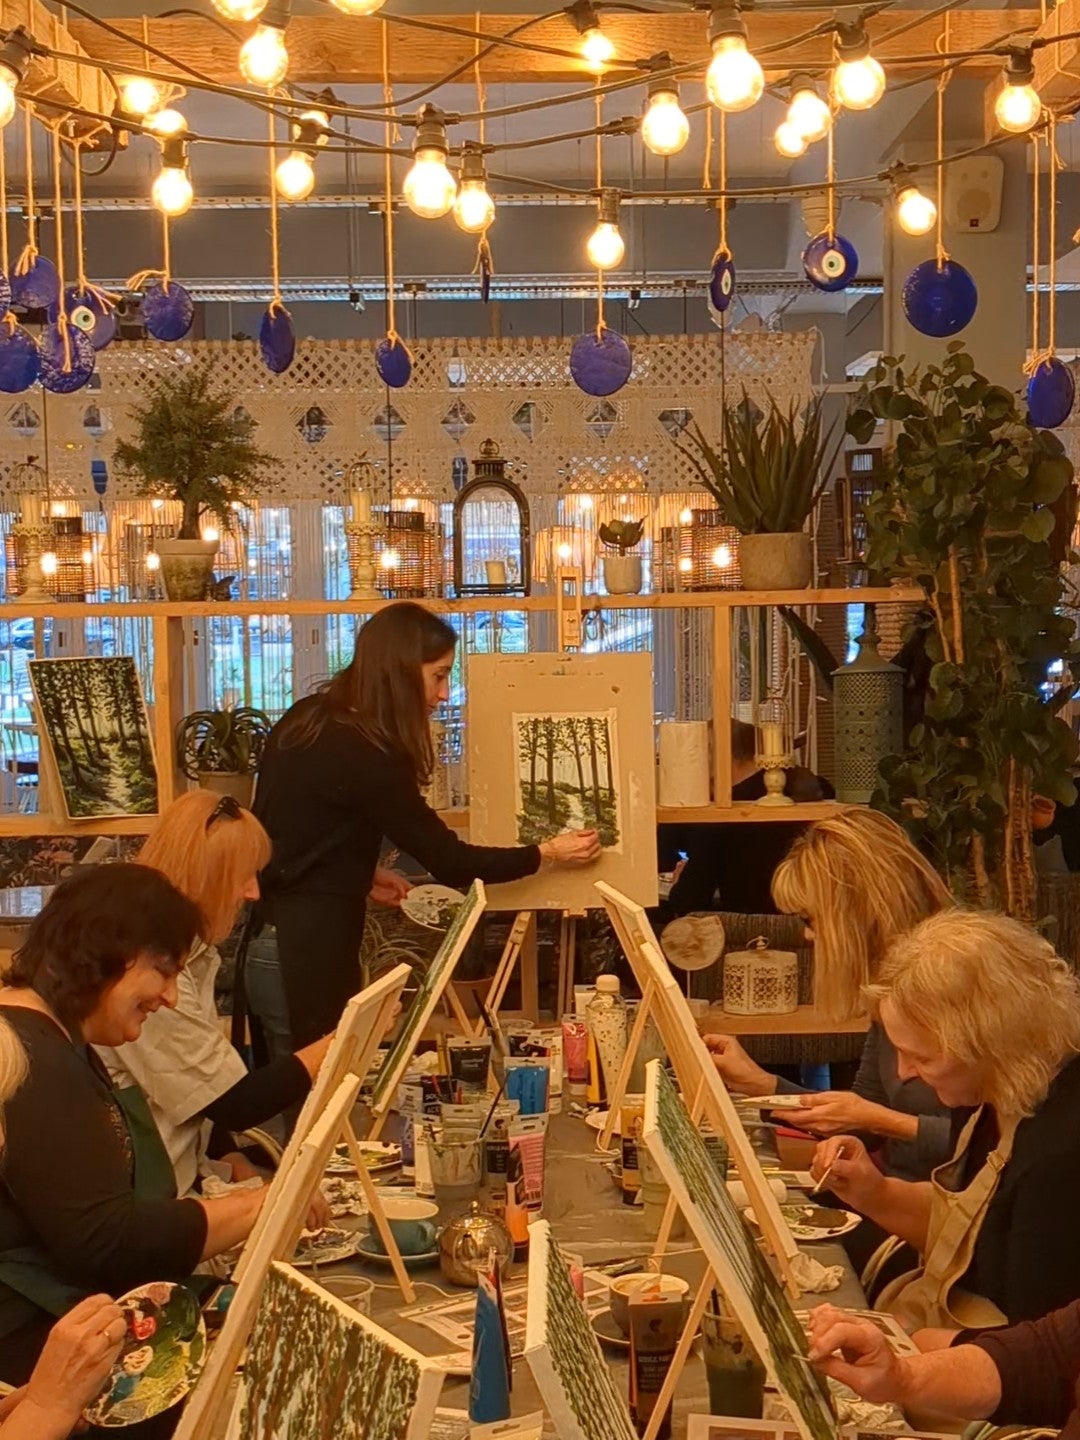 LEMONS STILL LIFE - Painting Workshop at Megan's Restaurant, Welwyn - 29th MAY 2024, 10am